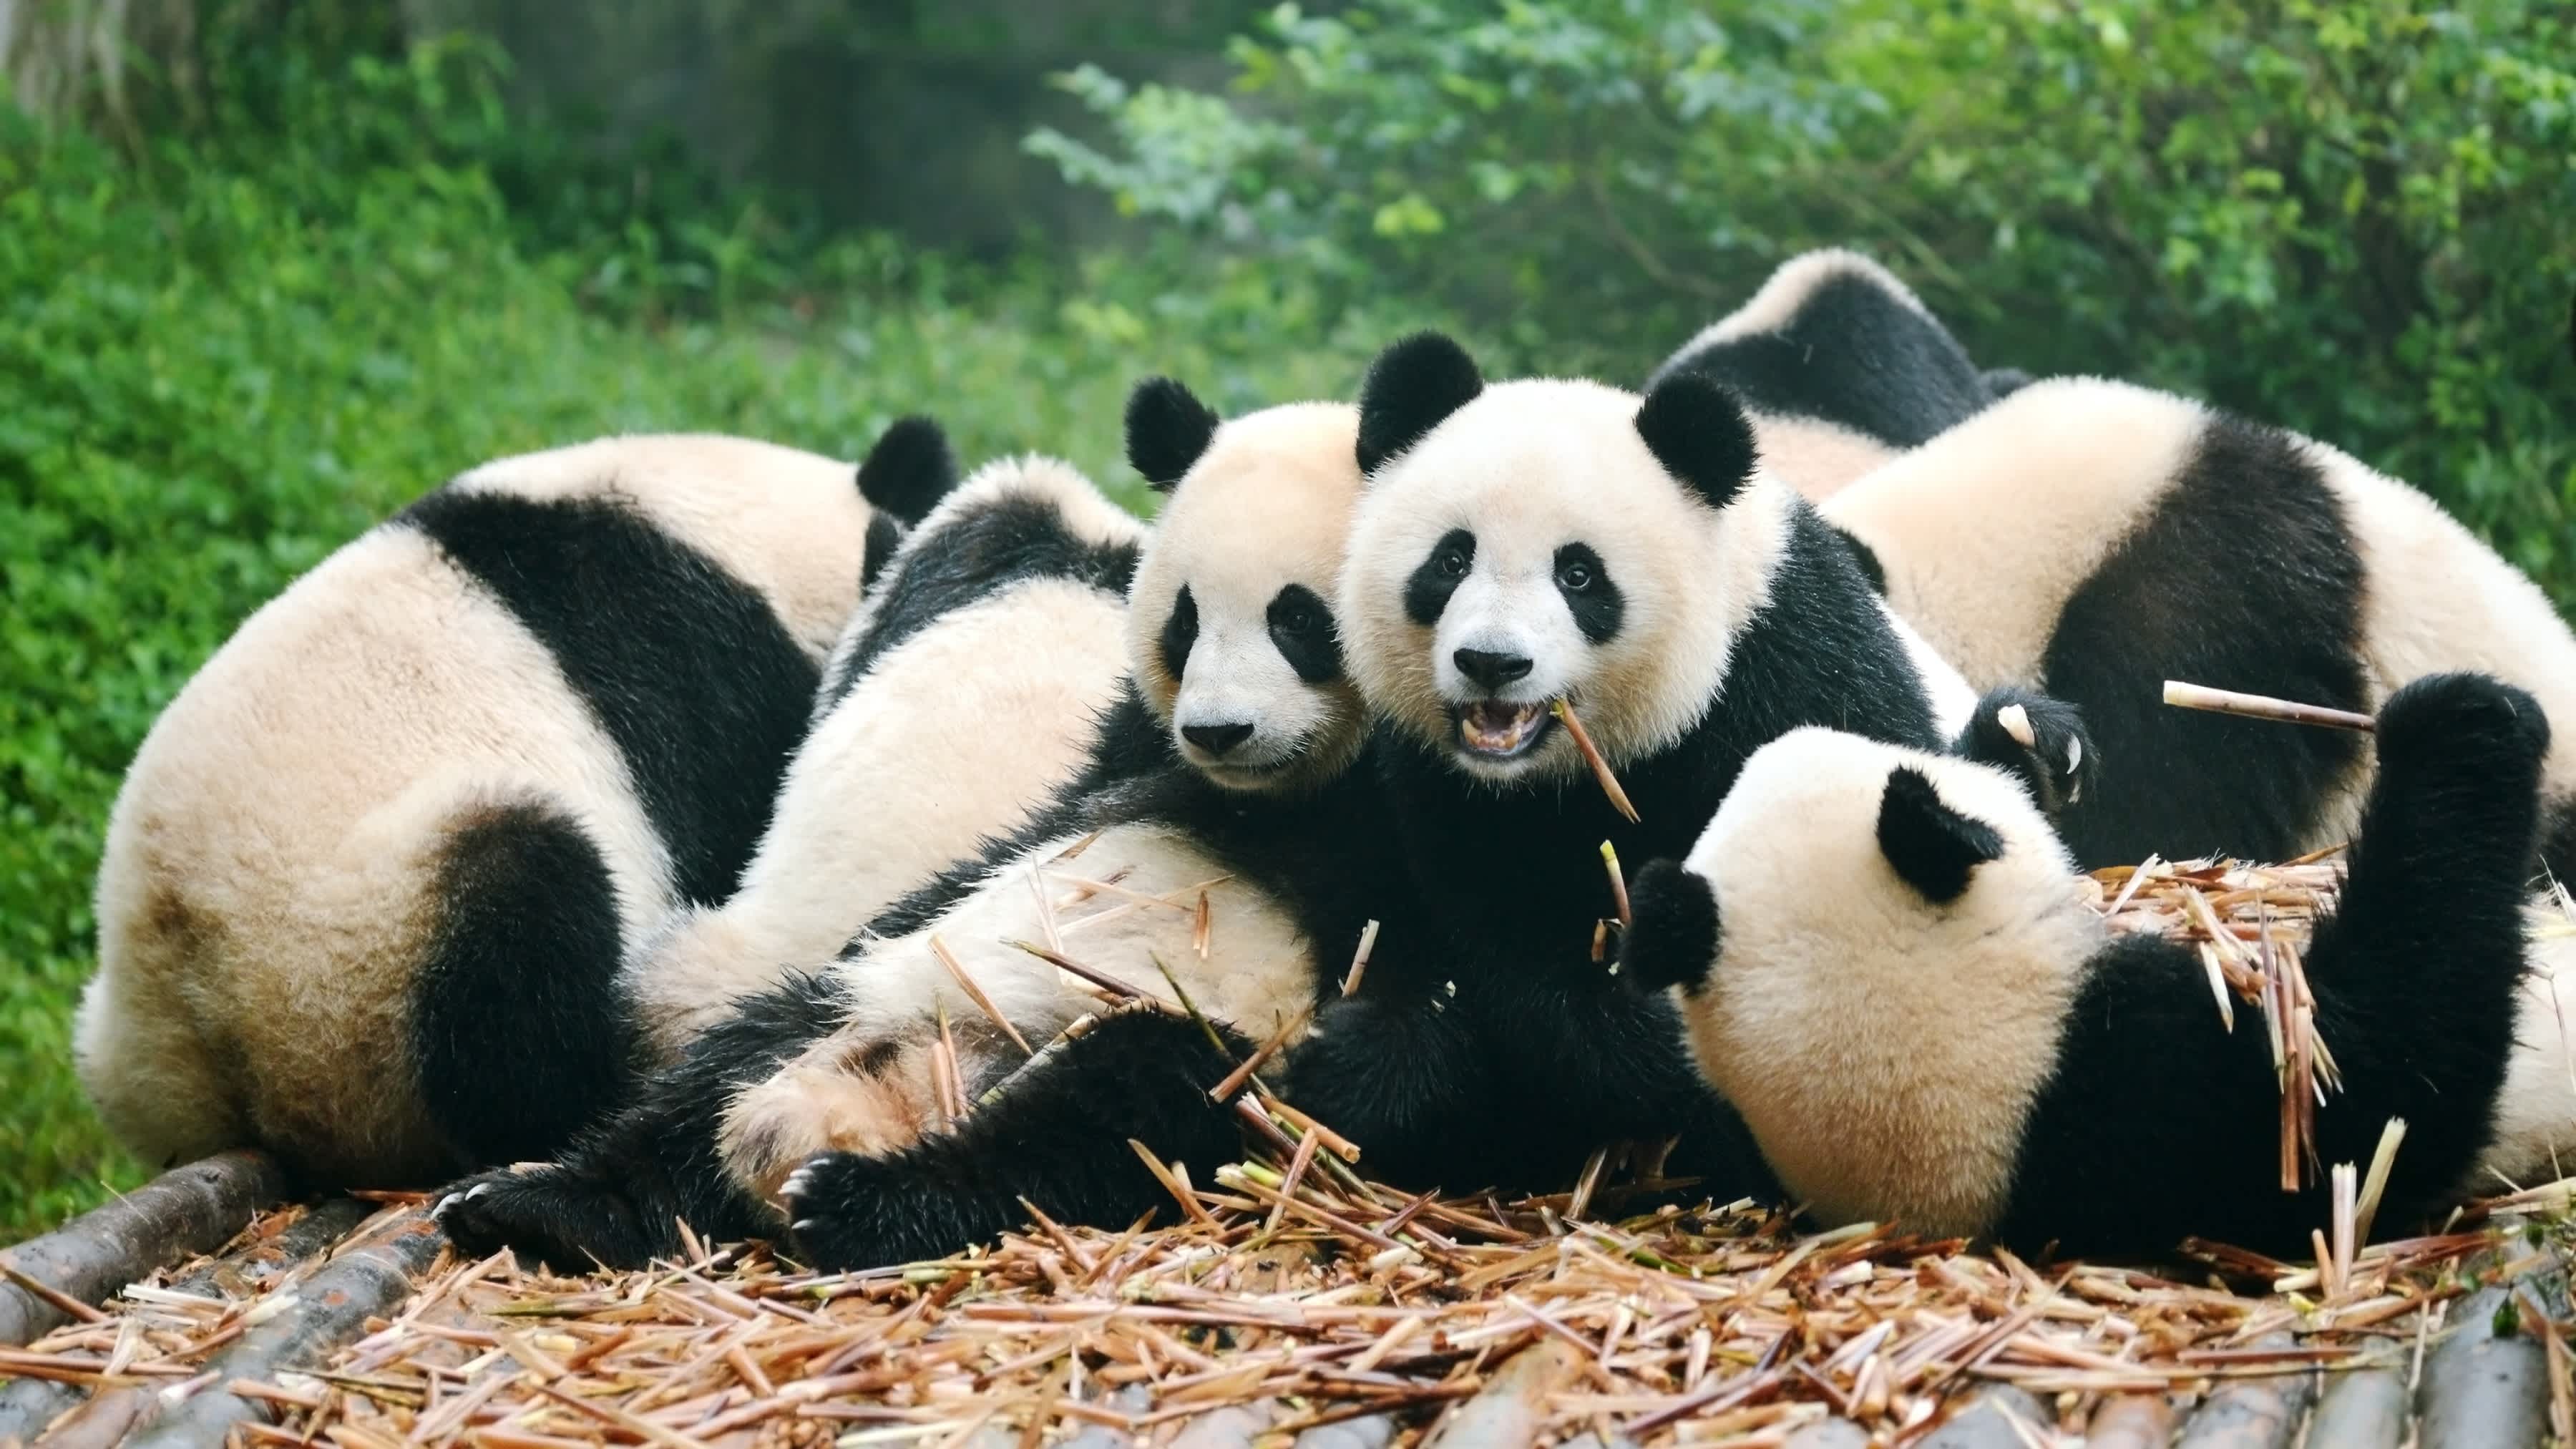 Group of pandas eating, in Chendgu, China.